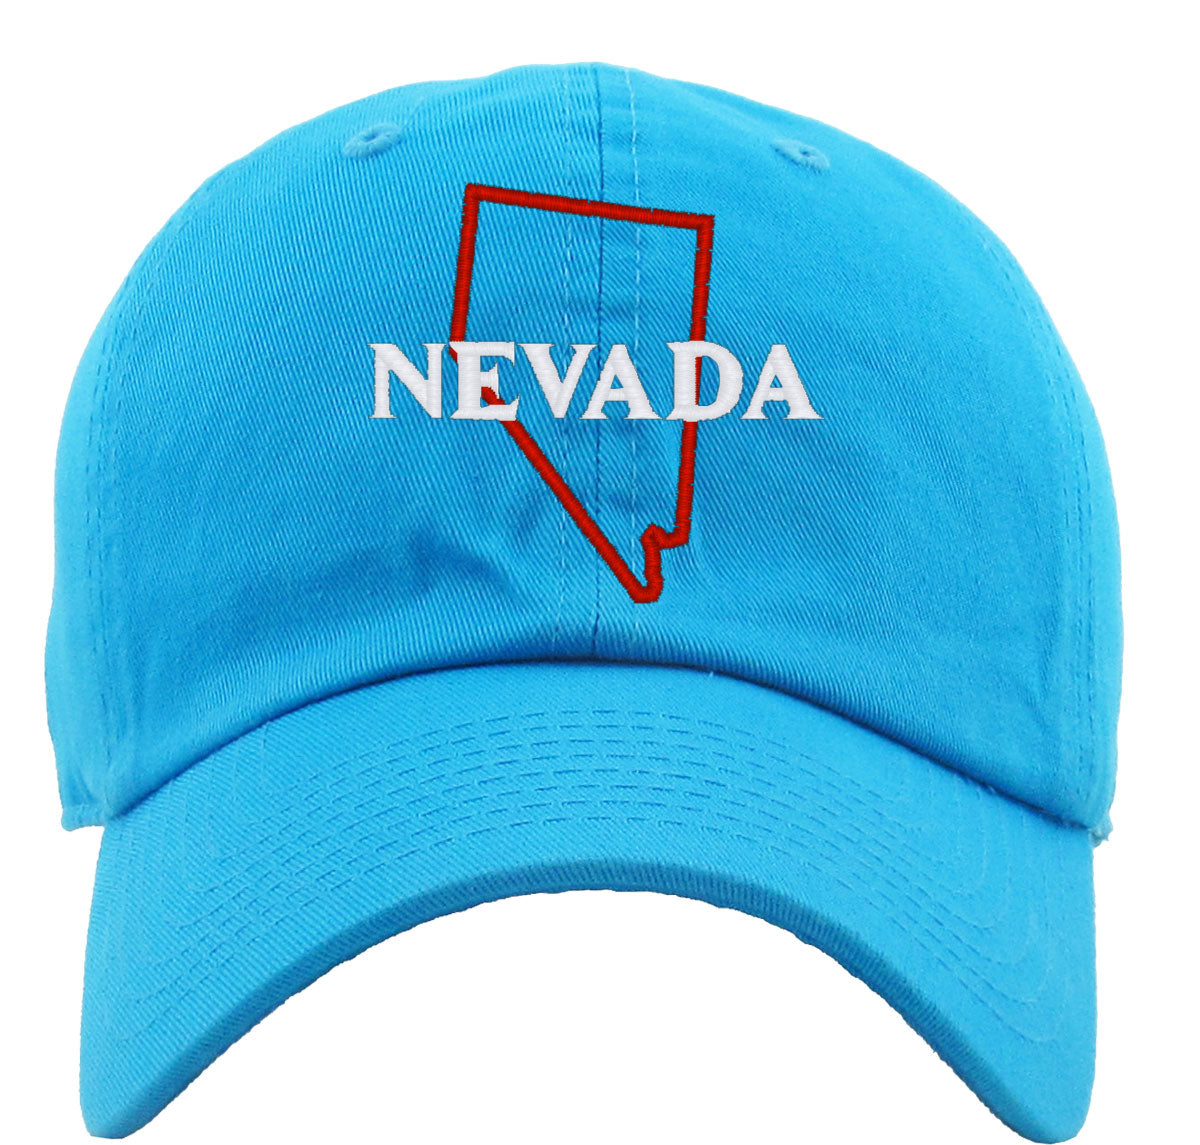 Nevada Premium Baseball Cap